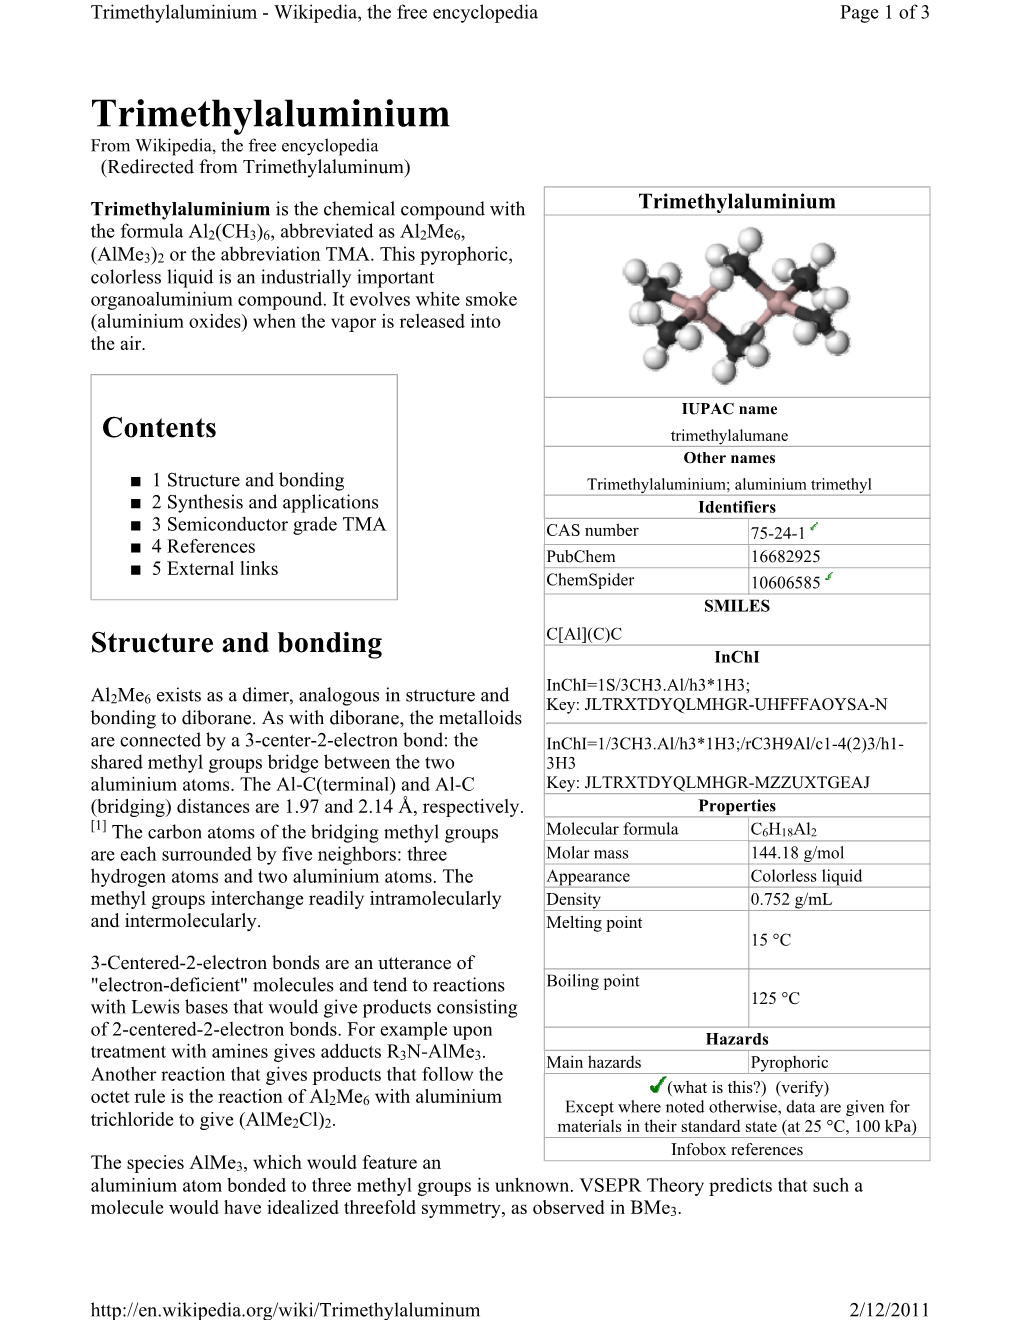 Trimethylaluminium - Wikipedia, the Free Encyclopedia Page 1 of 3